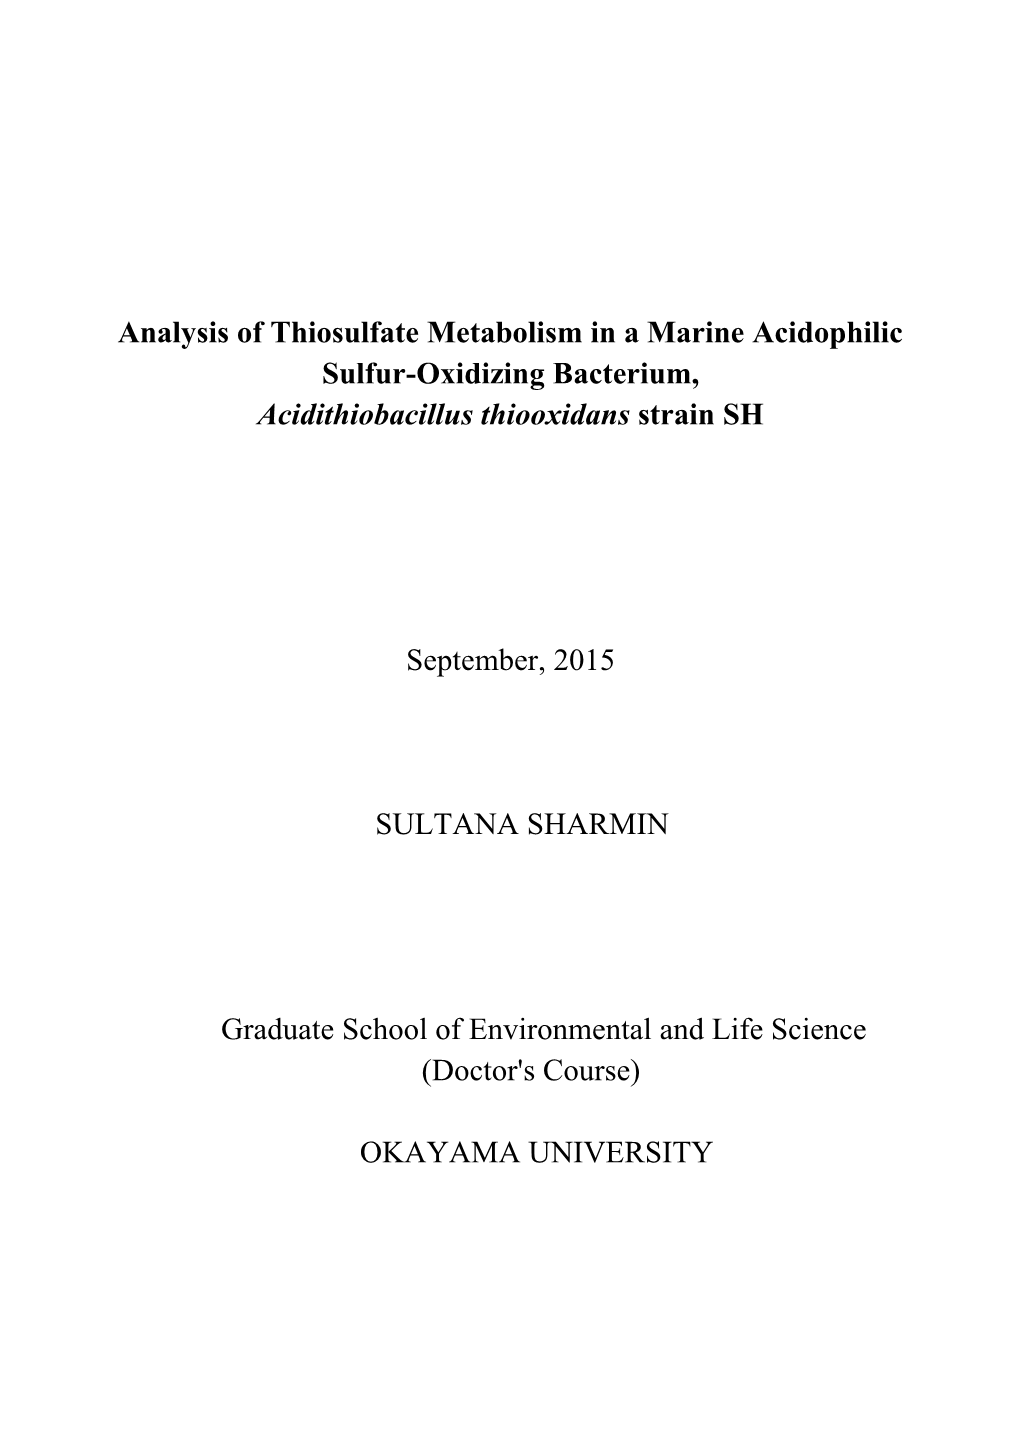 Analysis of Thiosulfate Metabolism in a Marine Acidophilic Sulfur-Oxidizing Bacterium, Acidithiobacillus Thiooxidans Strain SH